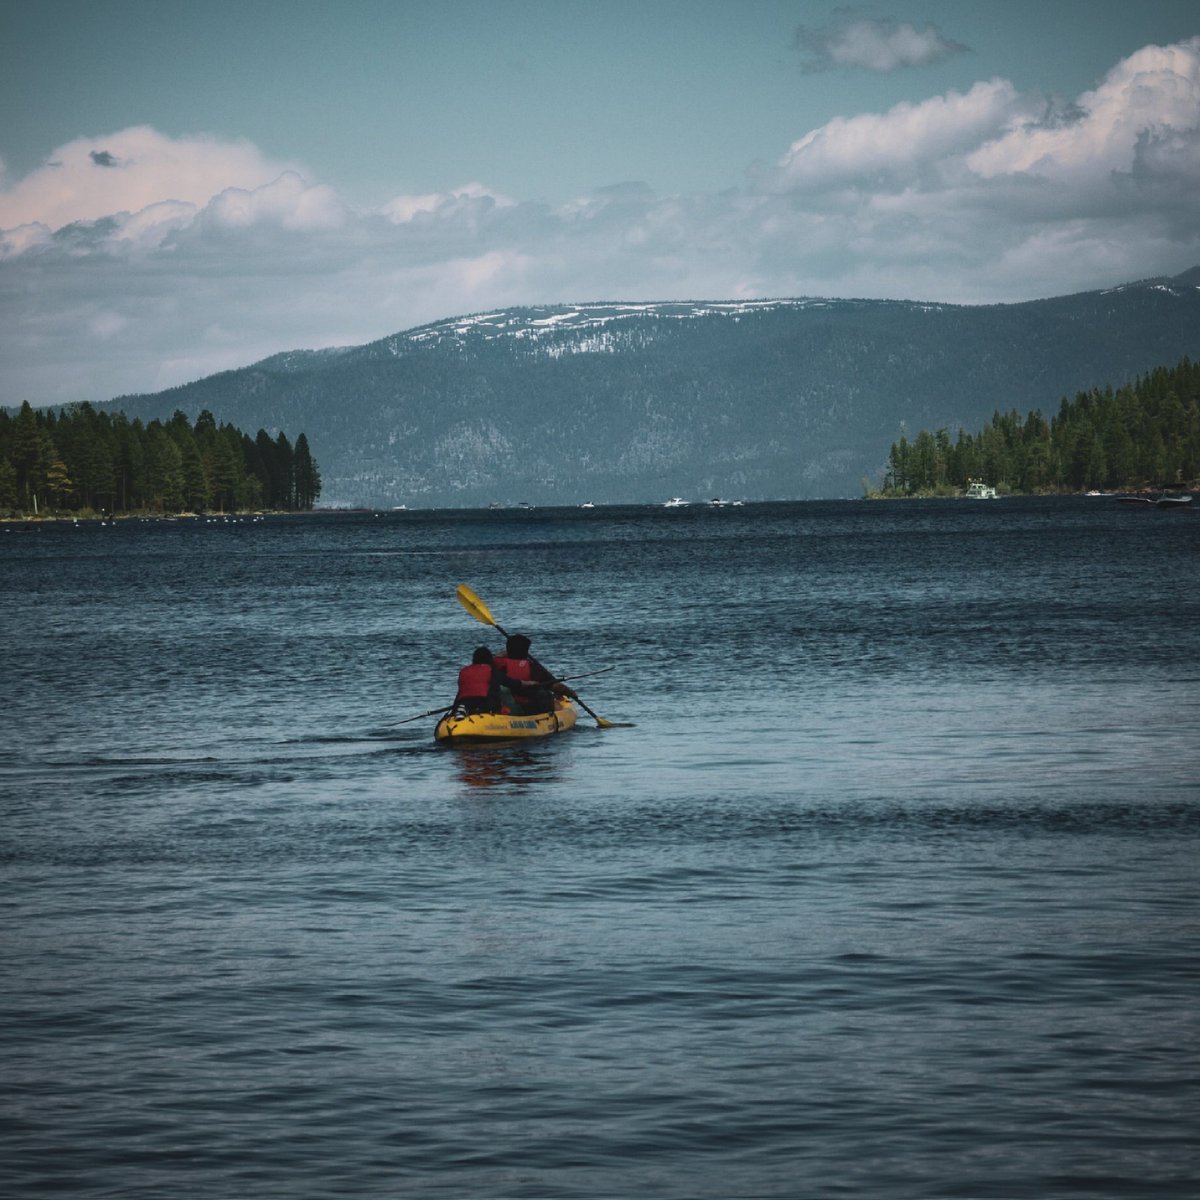 Comment who is your favorite person to explore Lake Tahoe by kayak..... 

By VL

#laketahoe #tahoe #california #southlaketahoe #nevada #nature #travel #lake #tahoelife #reno #truckee #lakelife #renotahoe #mountains #naturephotography #keeptahoeblue #tahoesouth #visitcalifornia